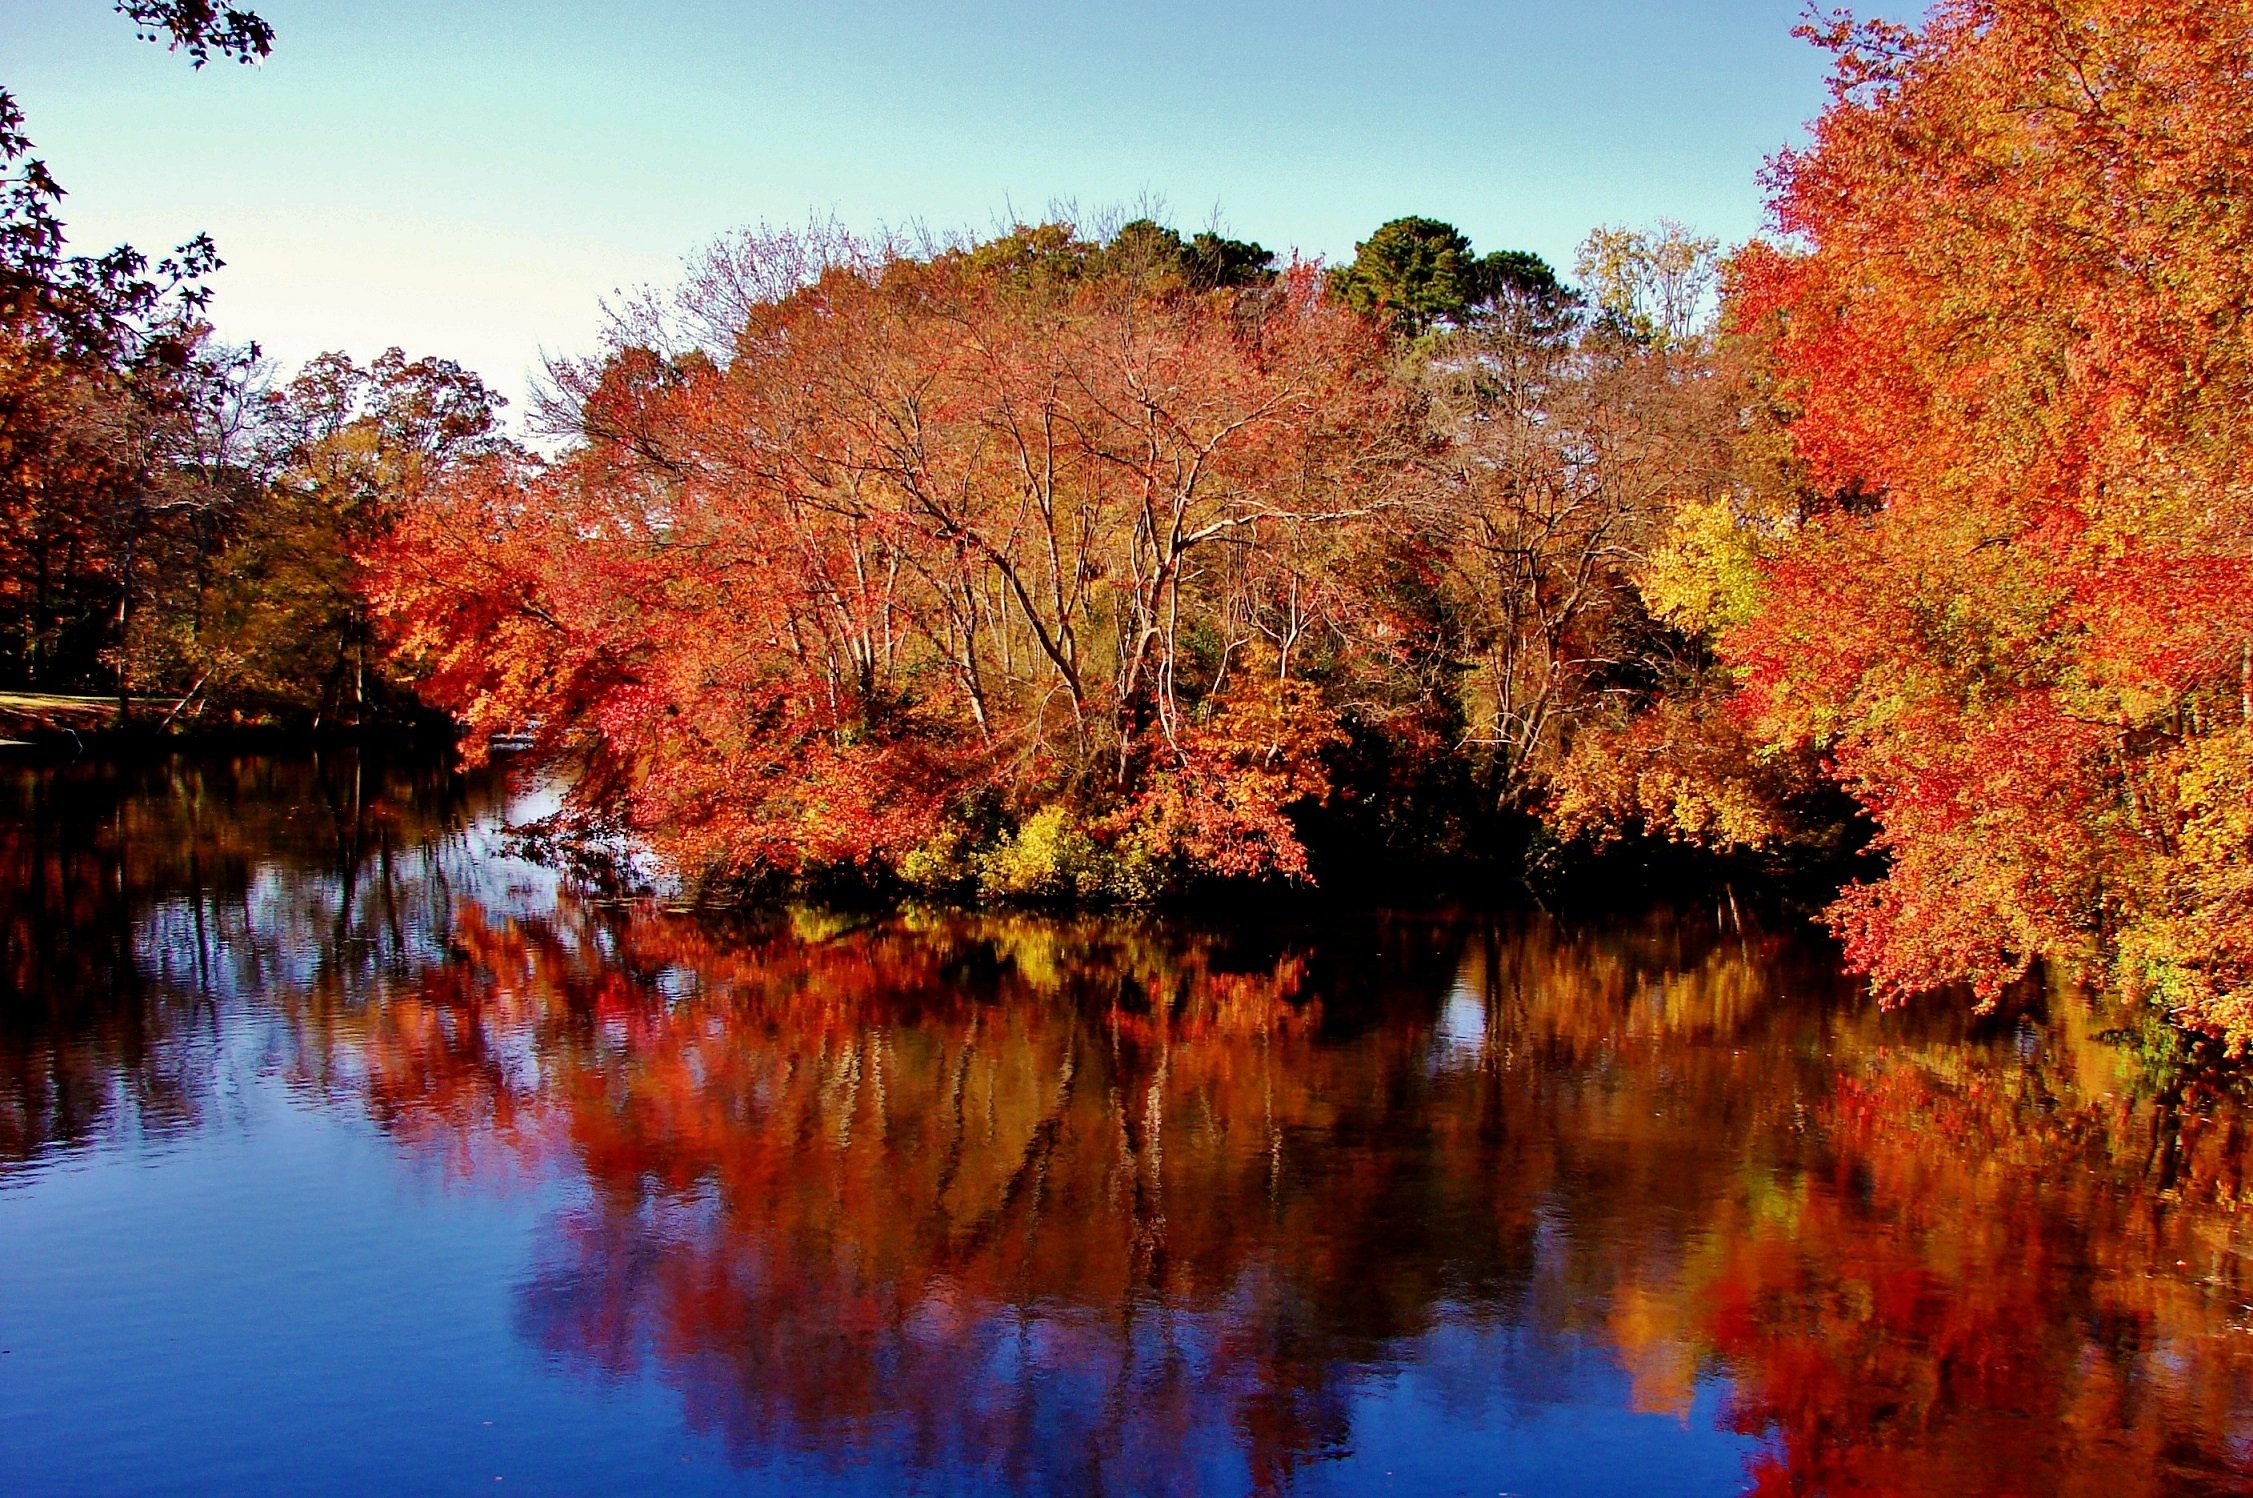 River Background, automne, Wallpaper, Wet, Landscapes, Cool